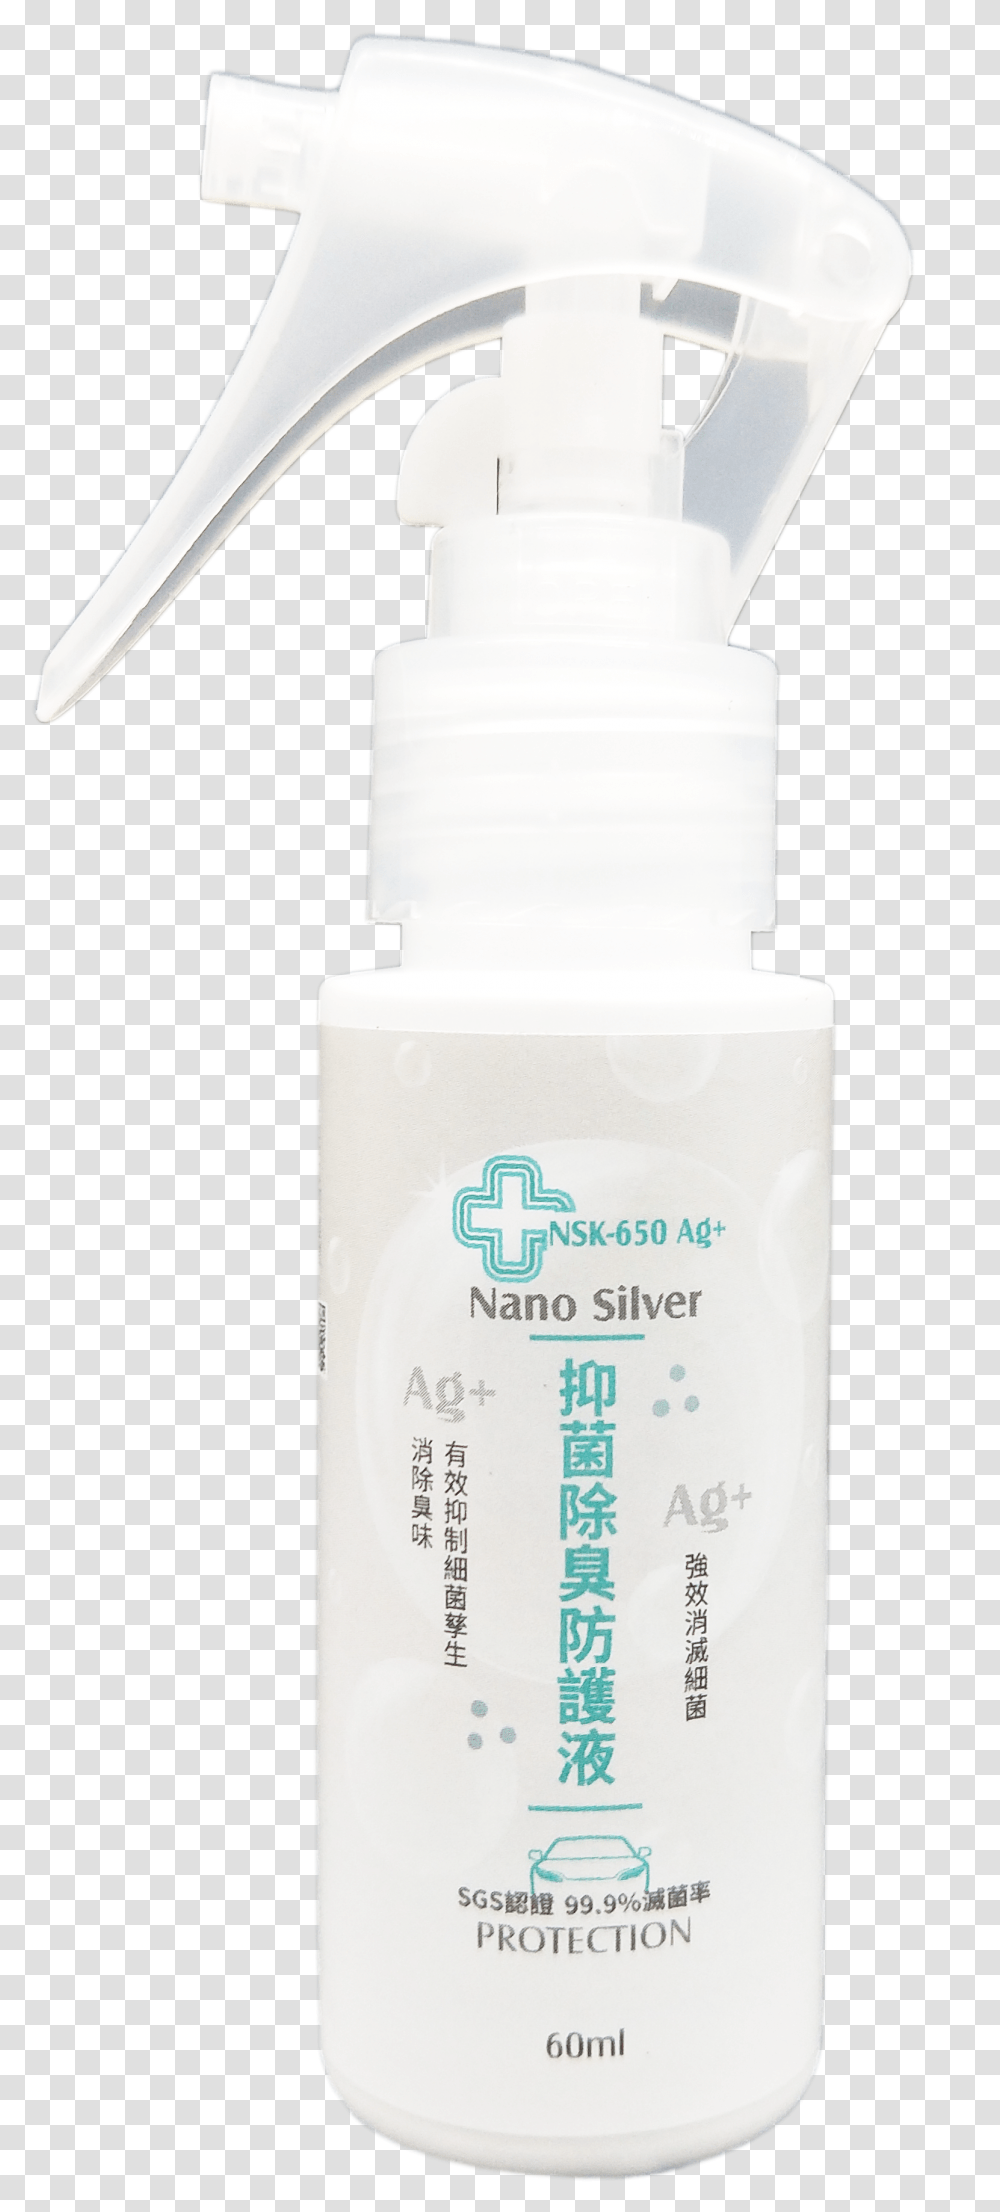 Antibacterial Water Spray Deca Angstrom Biotech Co Ltd Plastic Bottle, Cosmetics, Shaker, Milk, Beverage Transparent Png